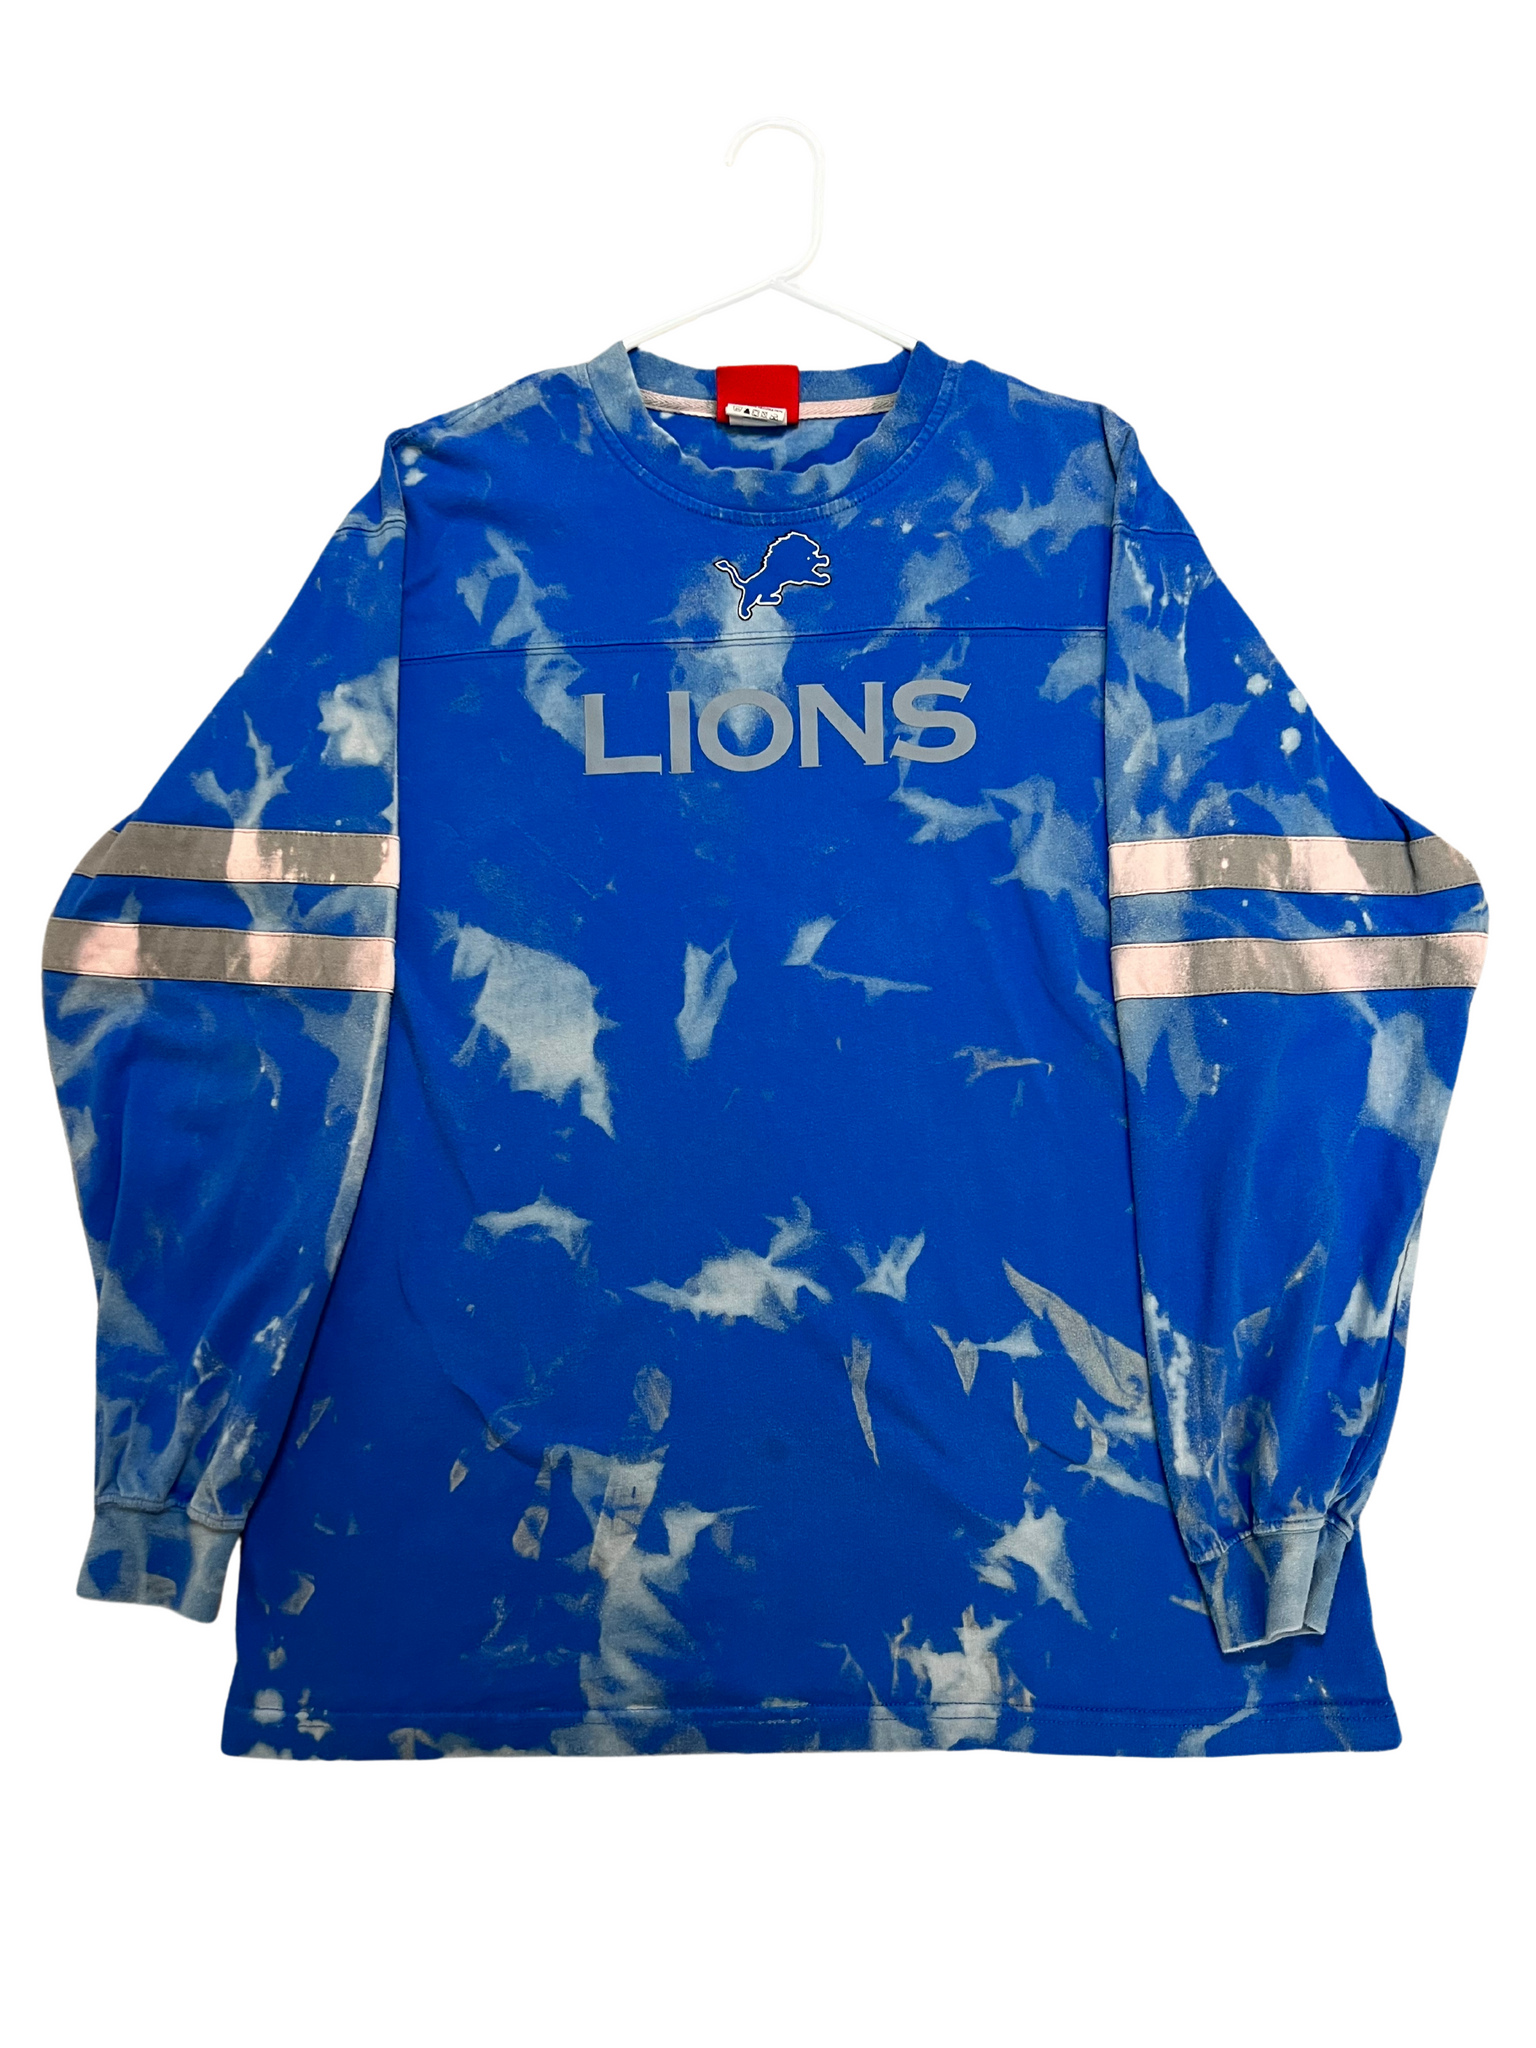 Detroit Lions Bleached Long Sleeve Shirt